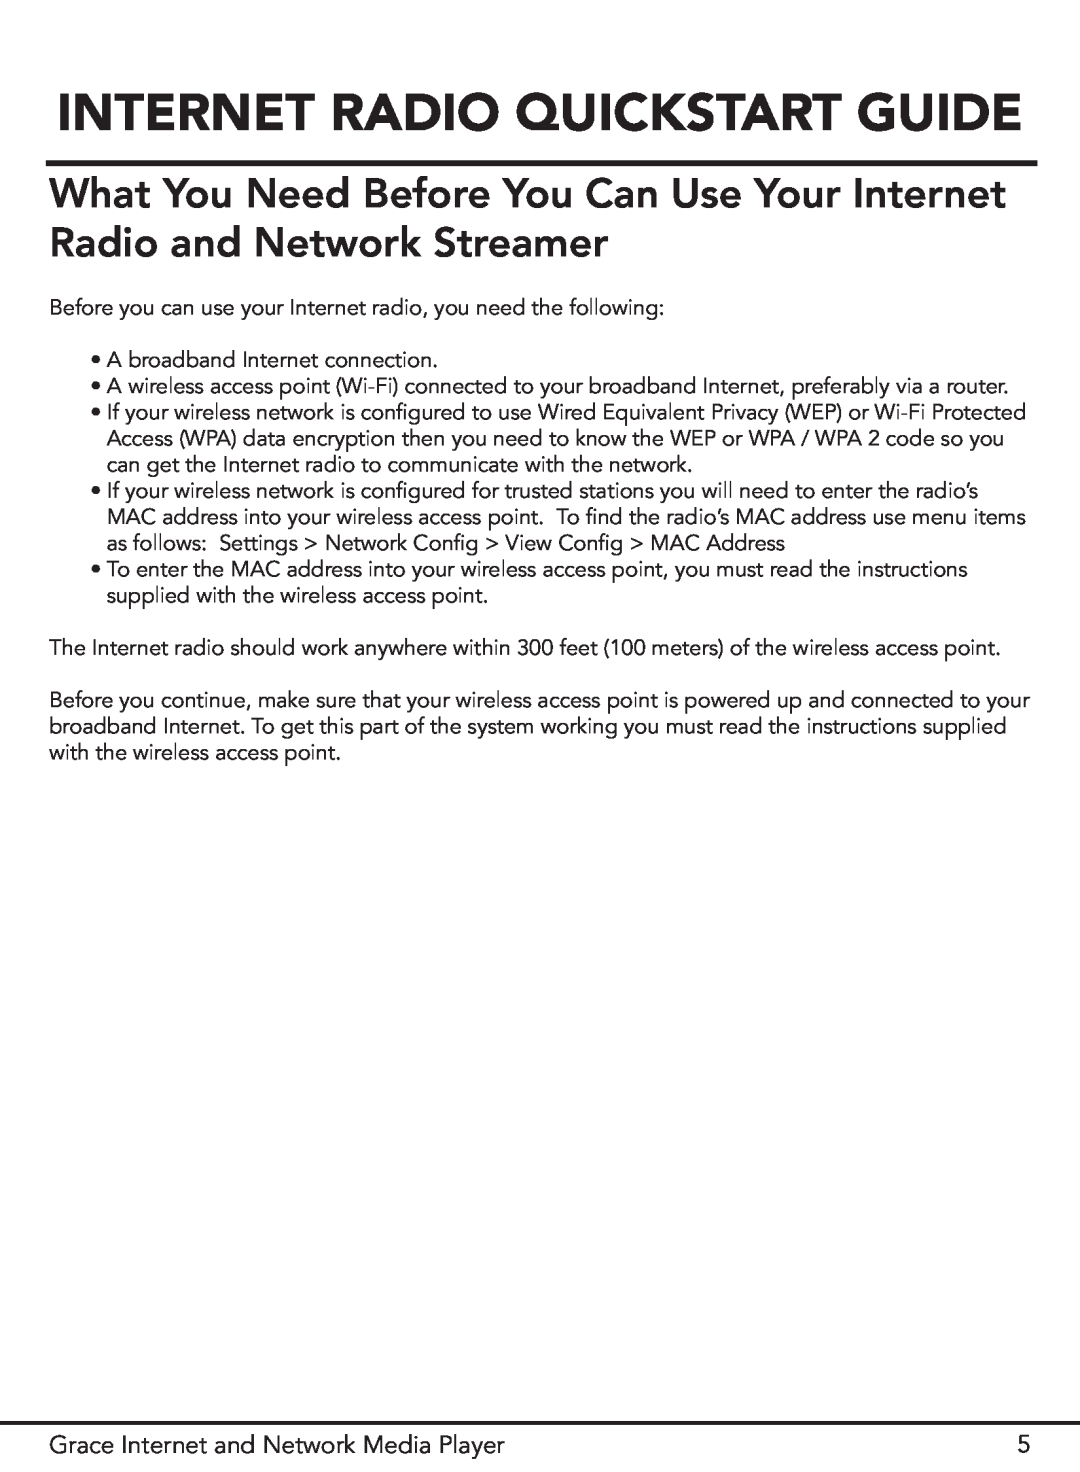 Grace GDI-IR3000 manual Internet Radio Quickstart Guide, Grace Internet and Network Media Player 